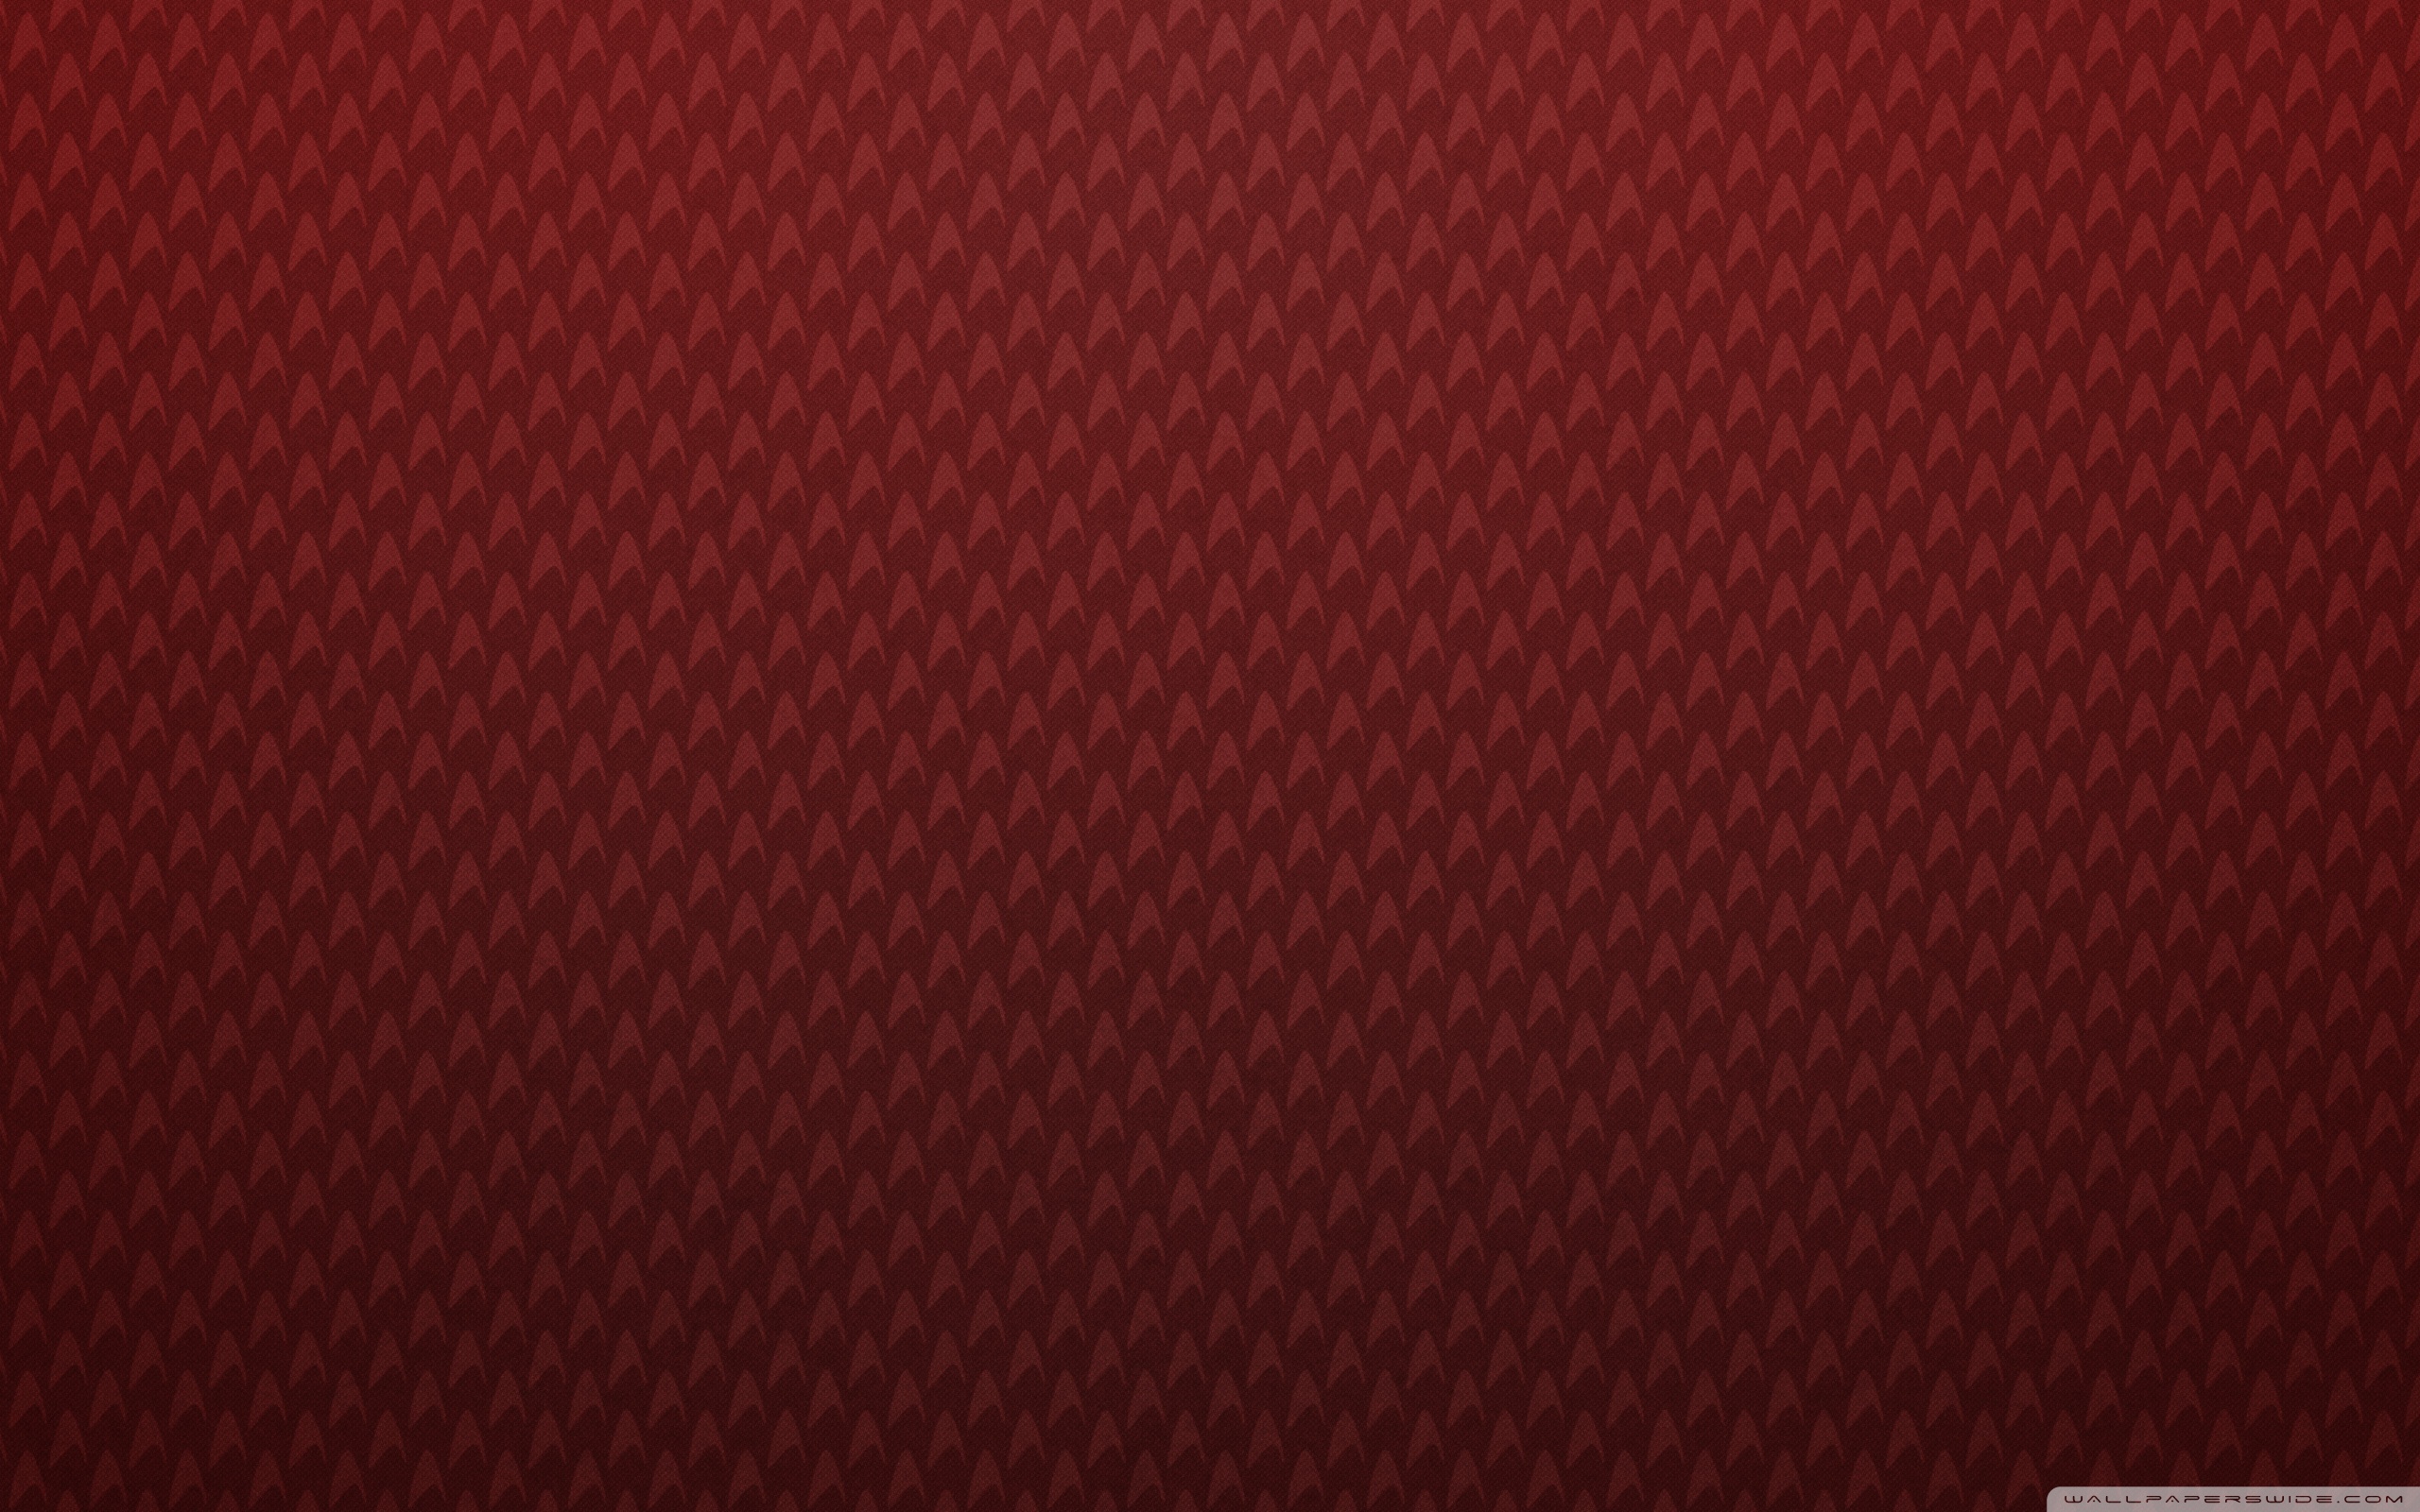 Vintage Red Wallpaper Ultra HD Desktop Background Wallpaper for 4K UHD TV, Multi Display, Dual Monitor, Tablet